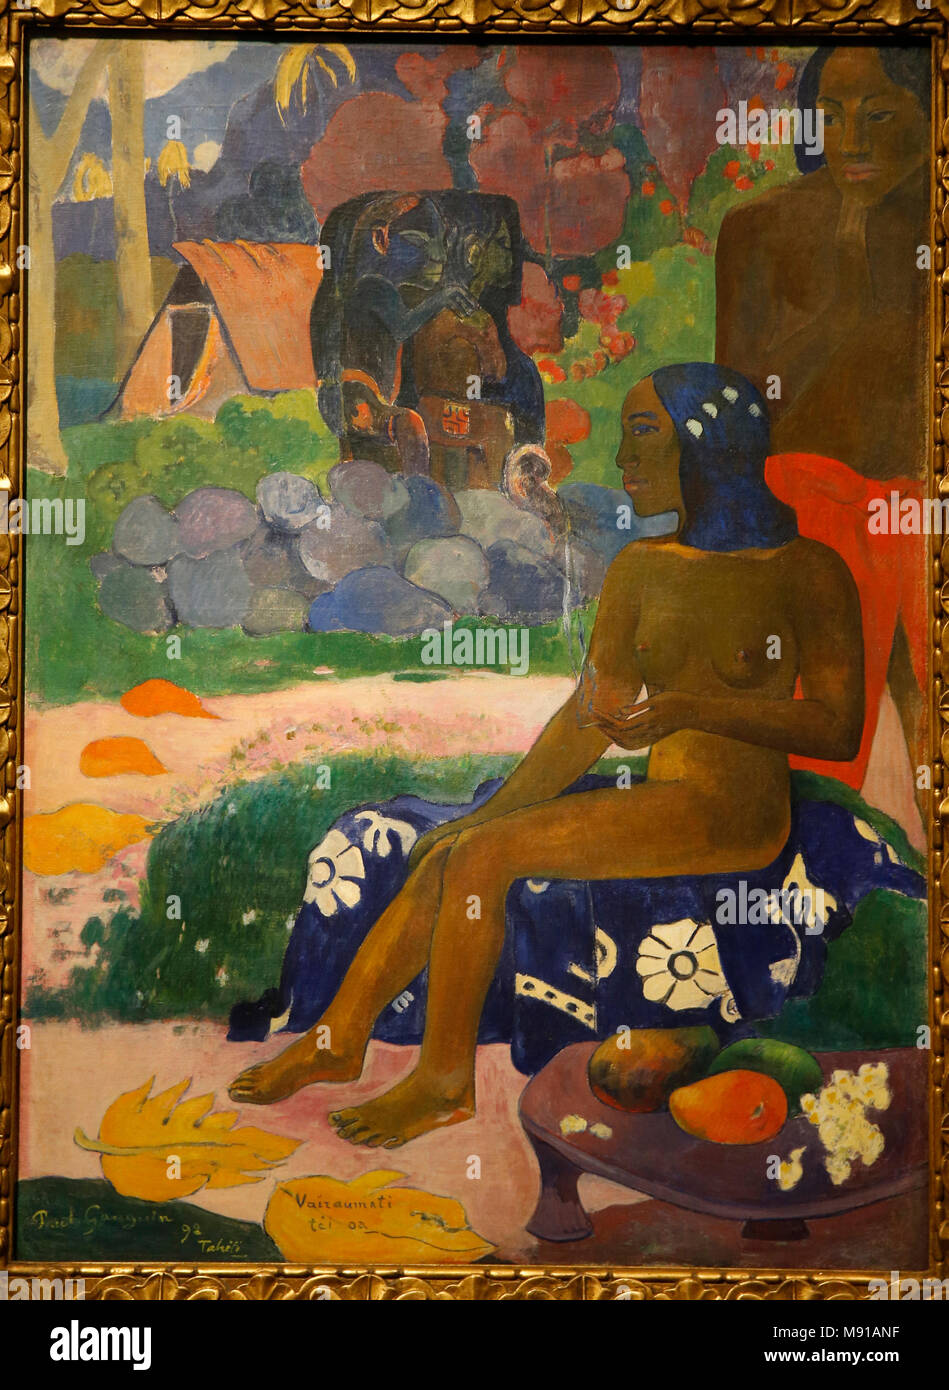 Paul Gauguin, Vairaumati tei oa (ihr Name war Vairaumati), 1892, Öl auf Leinwand. Shchukin Sammlung, Puschkin Museum der Schönen Künste, Moskau. Schuss beim Aussteller Stockfoto